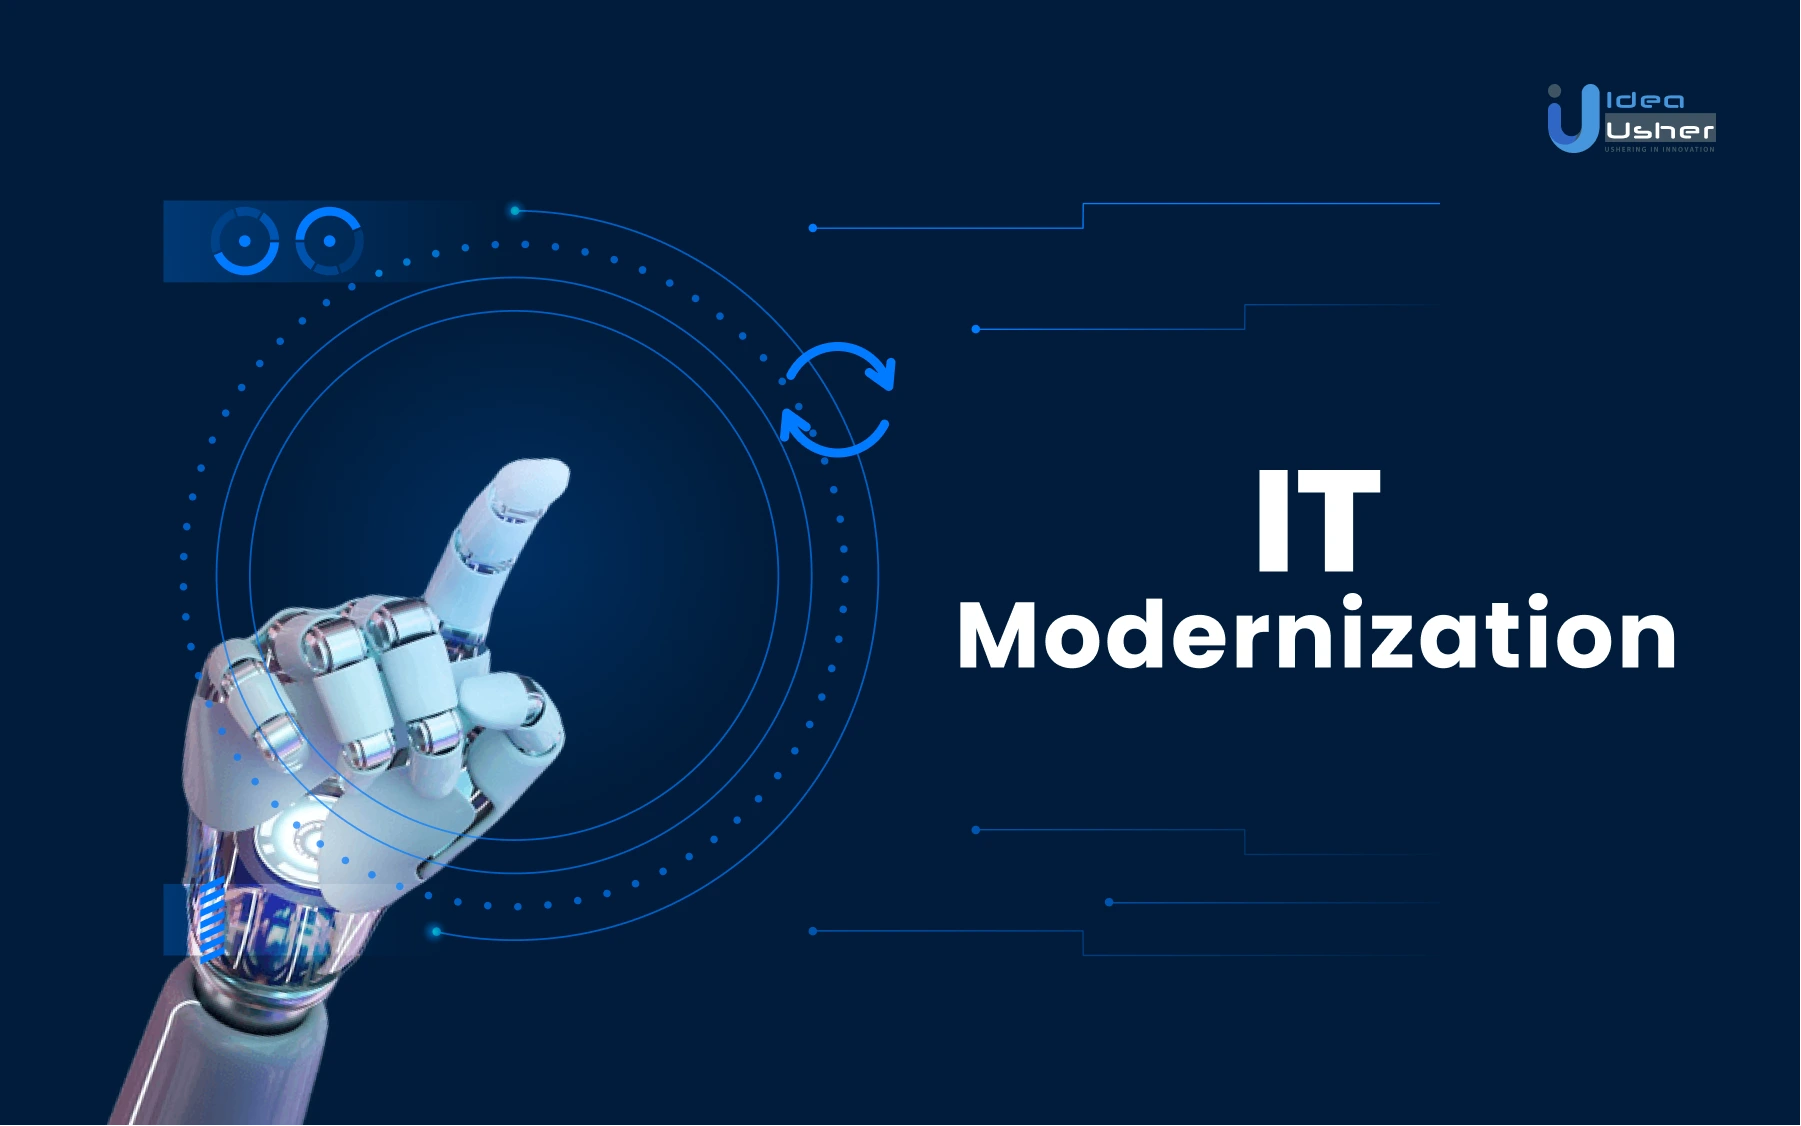 How to build IT modernization strategy?